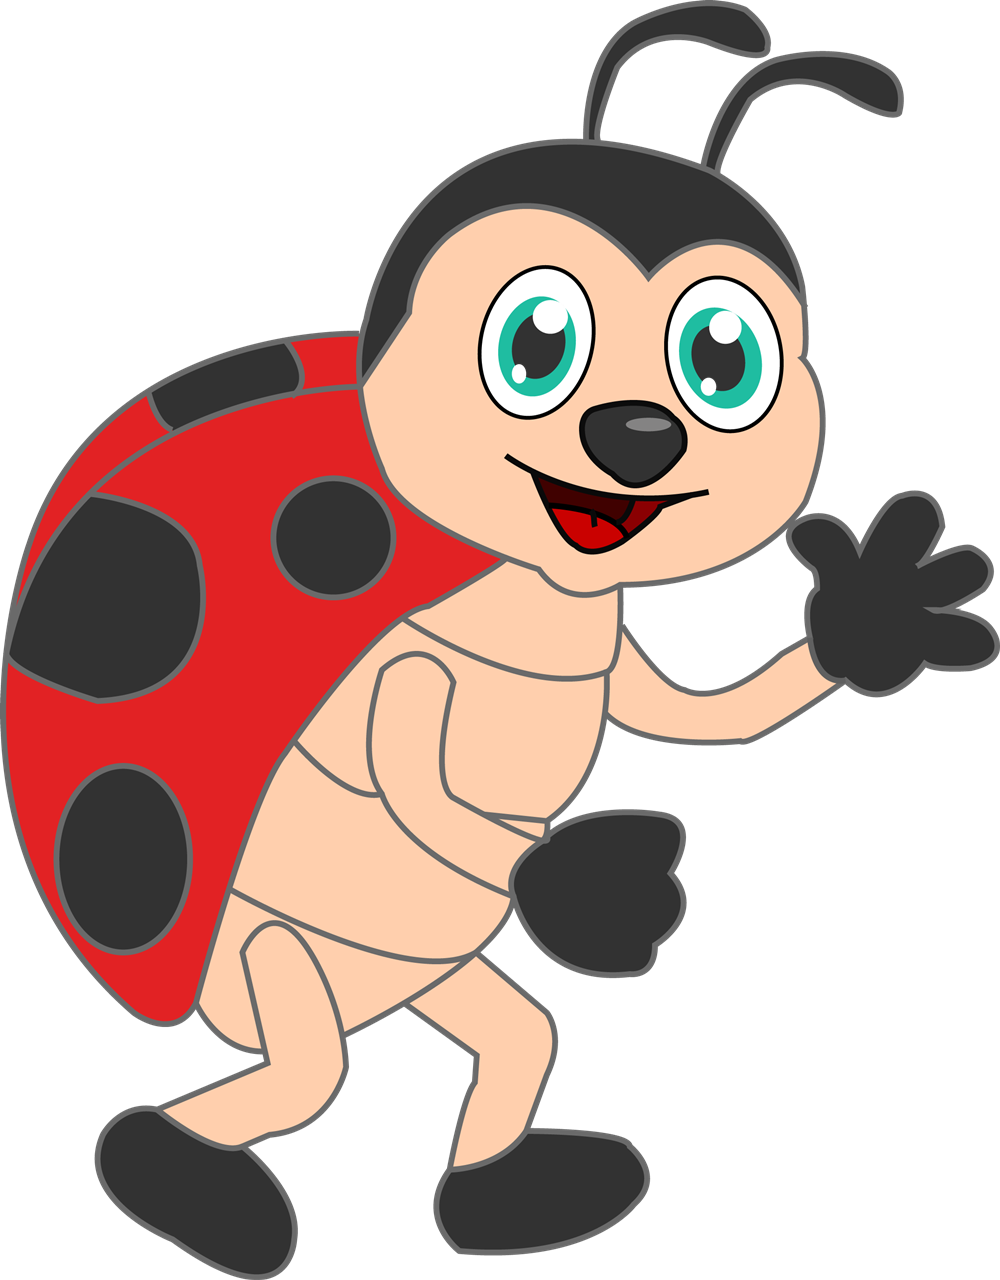 Free Cartoon Ladybug Cliparts, Download Free Cartoon Ladybug Cliparts